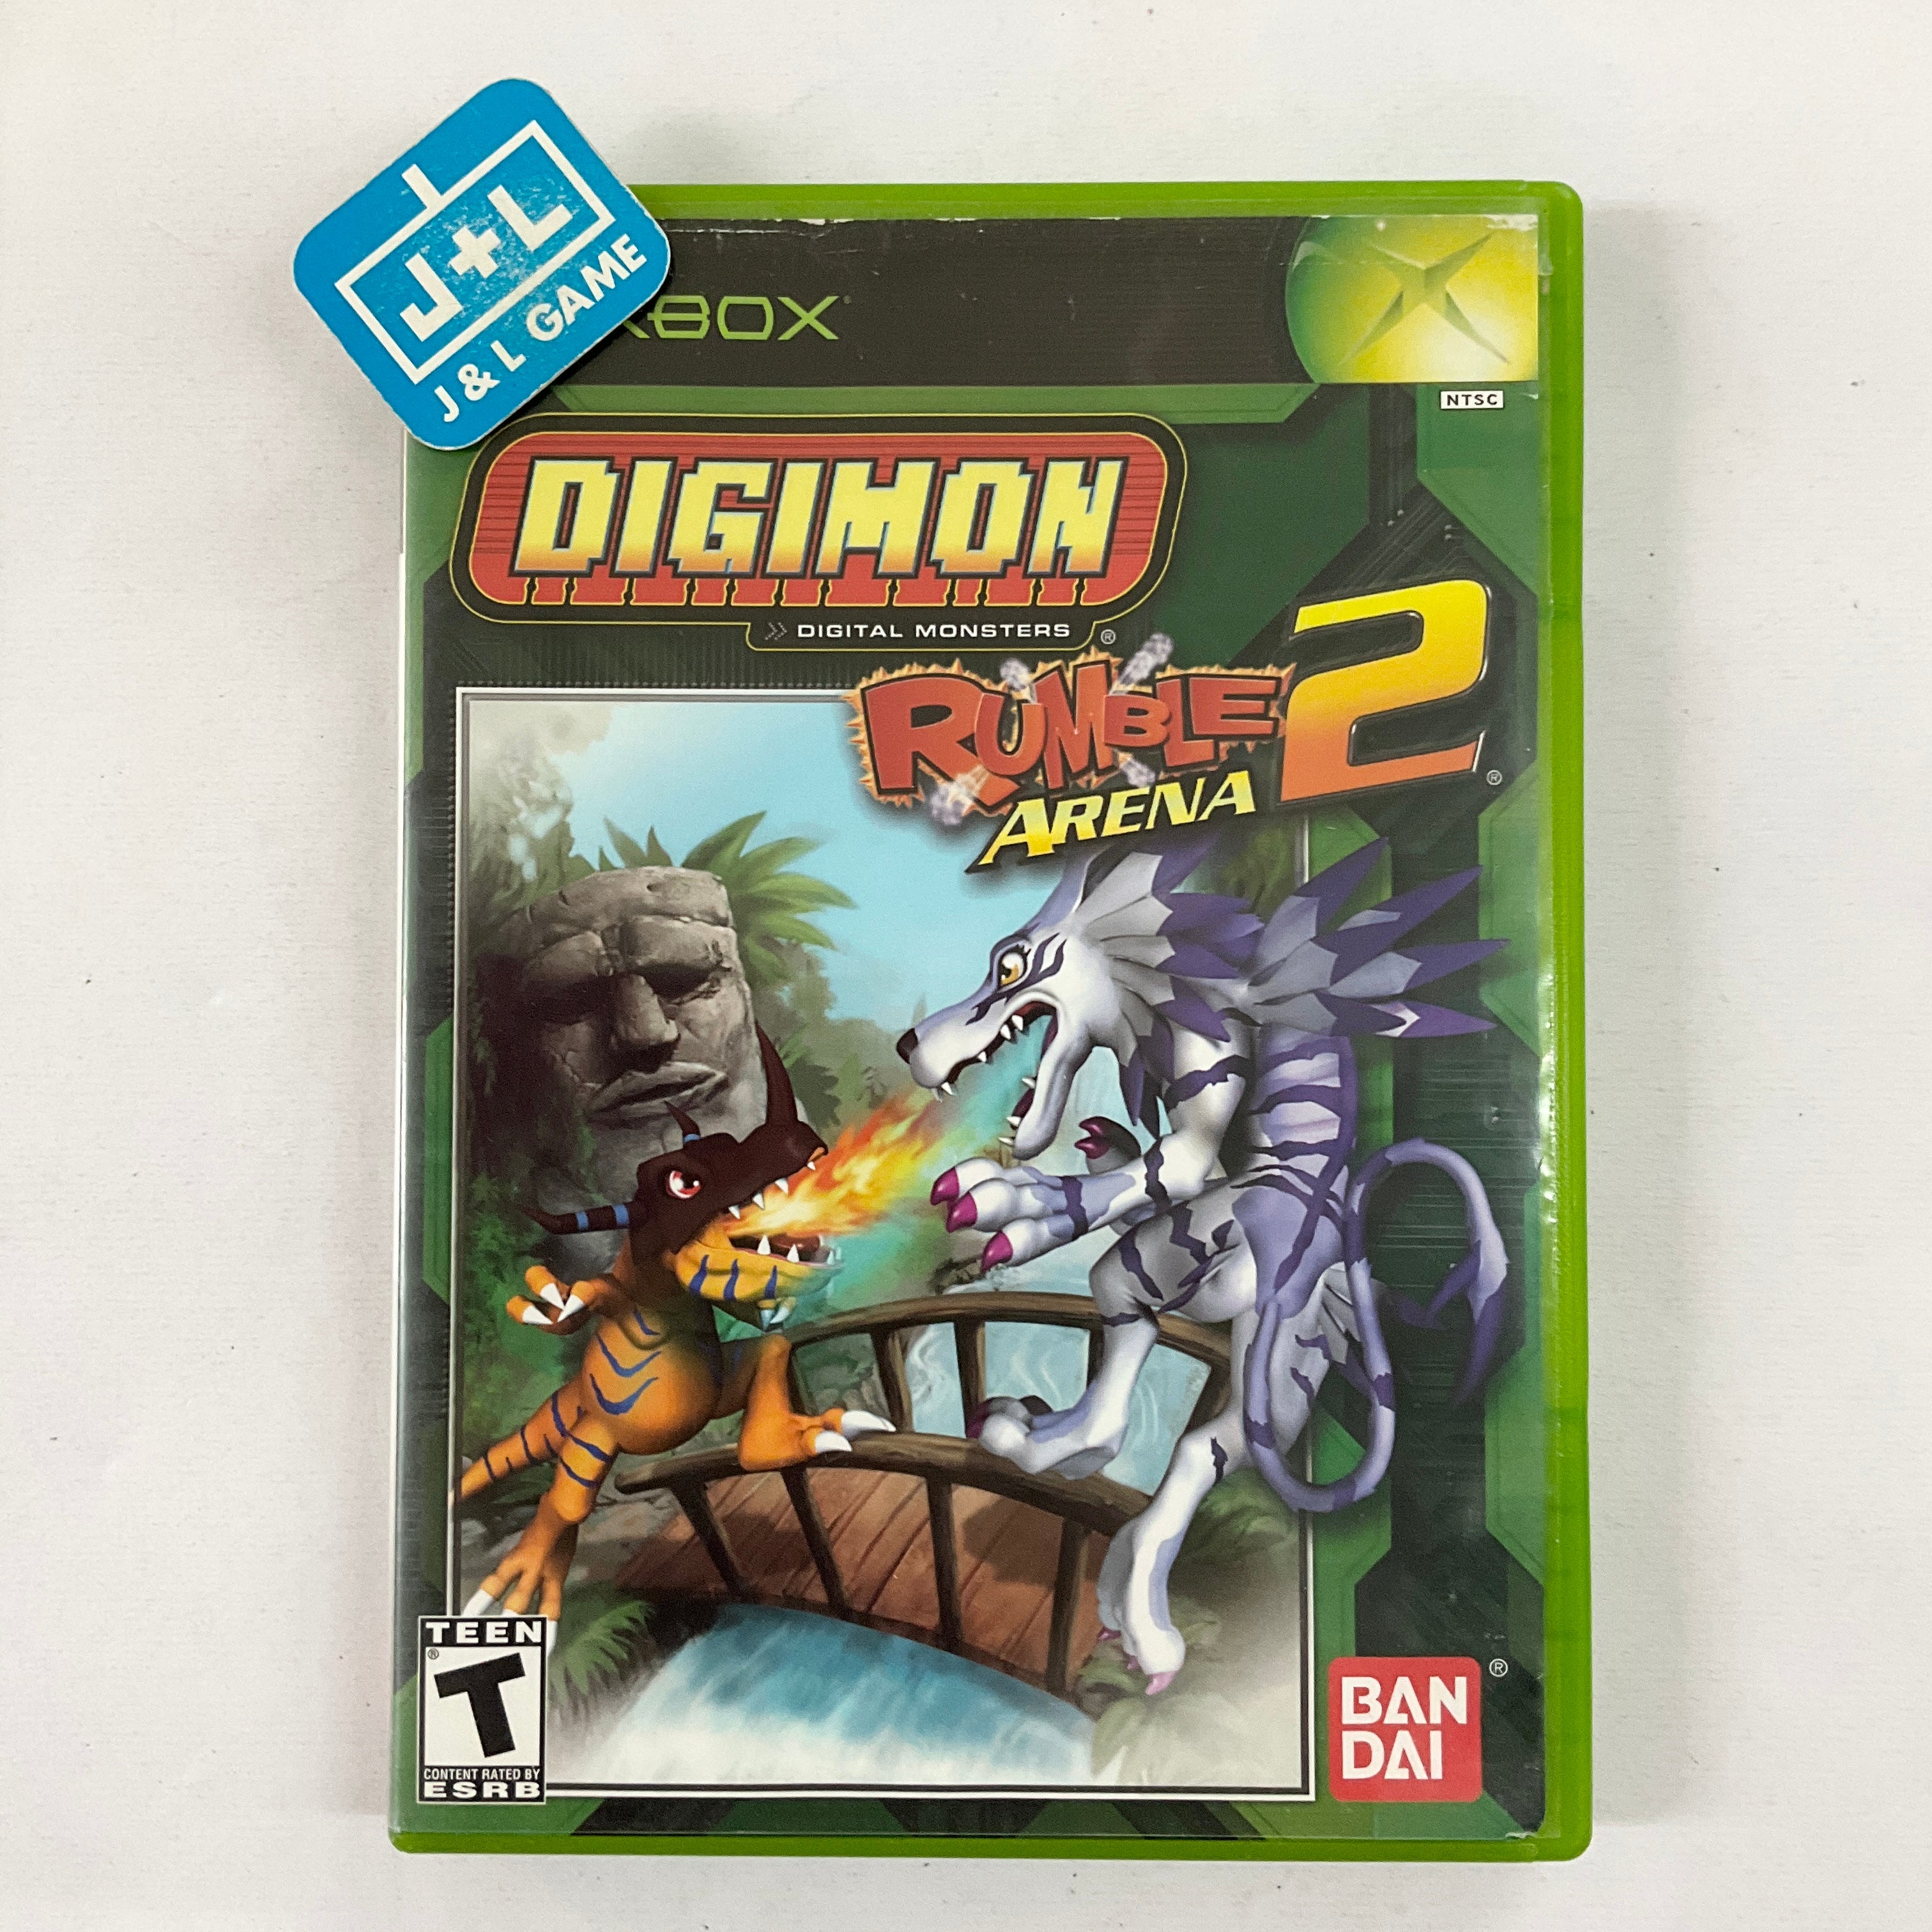 Digimon digital Monsters Rumble Arena 2 - (XB) Xbox [Pre-Owned] Video Games Bandai   